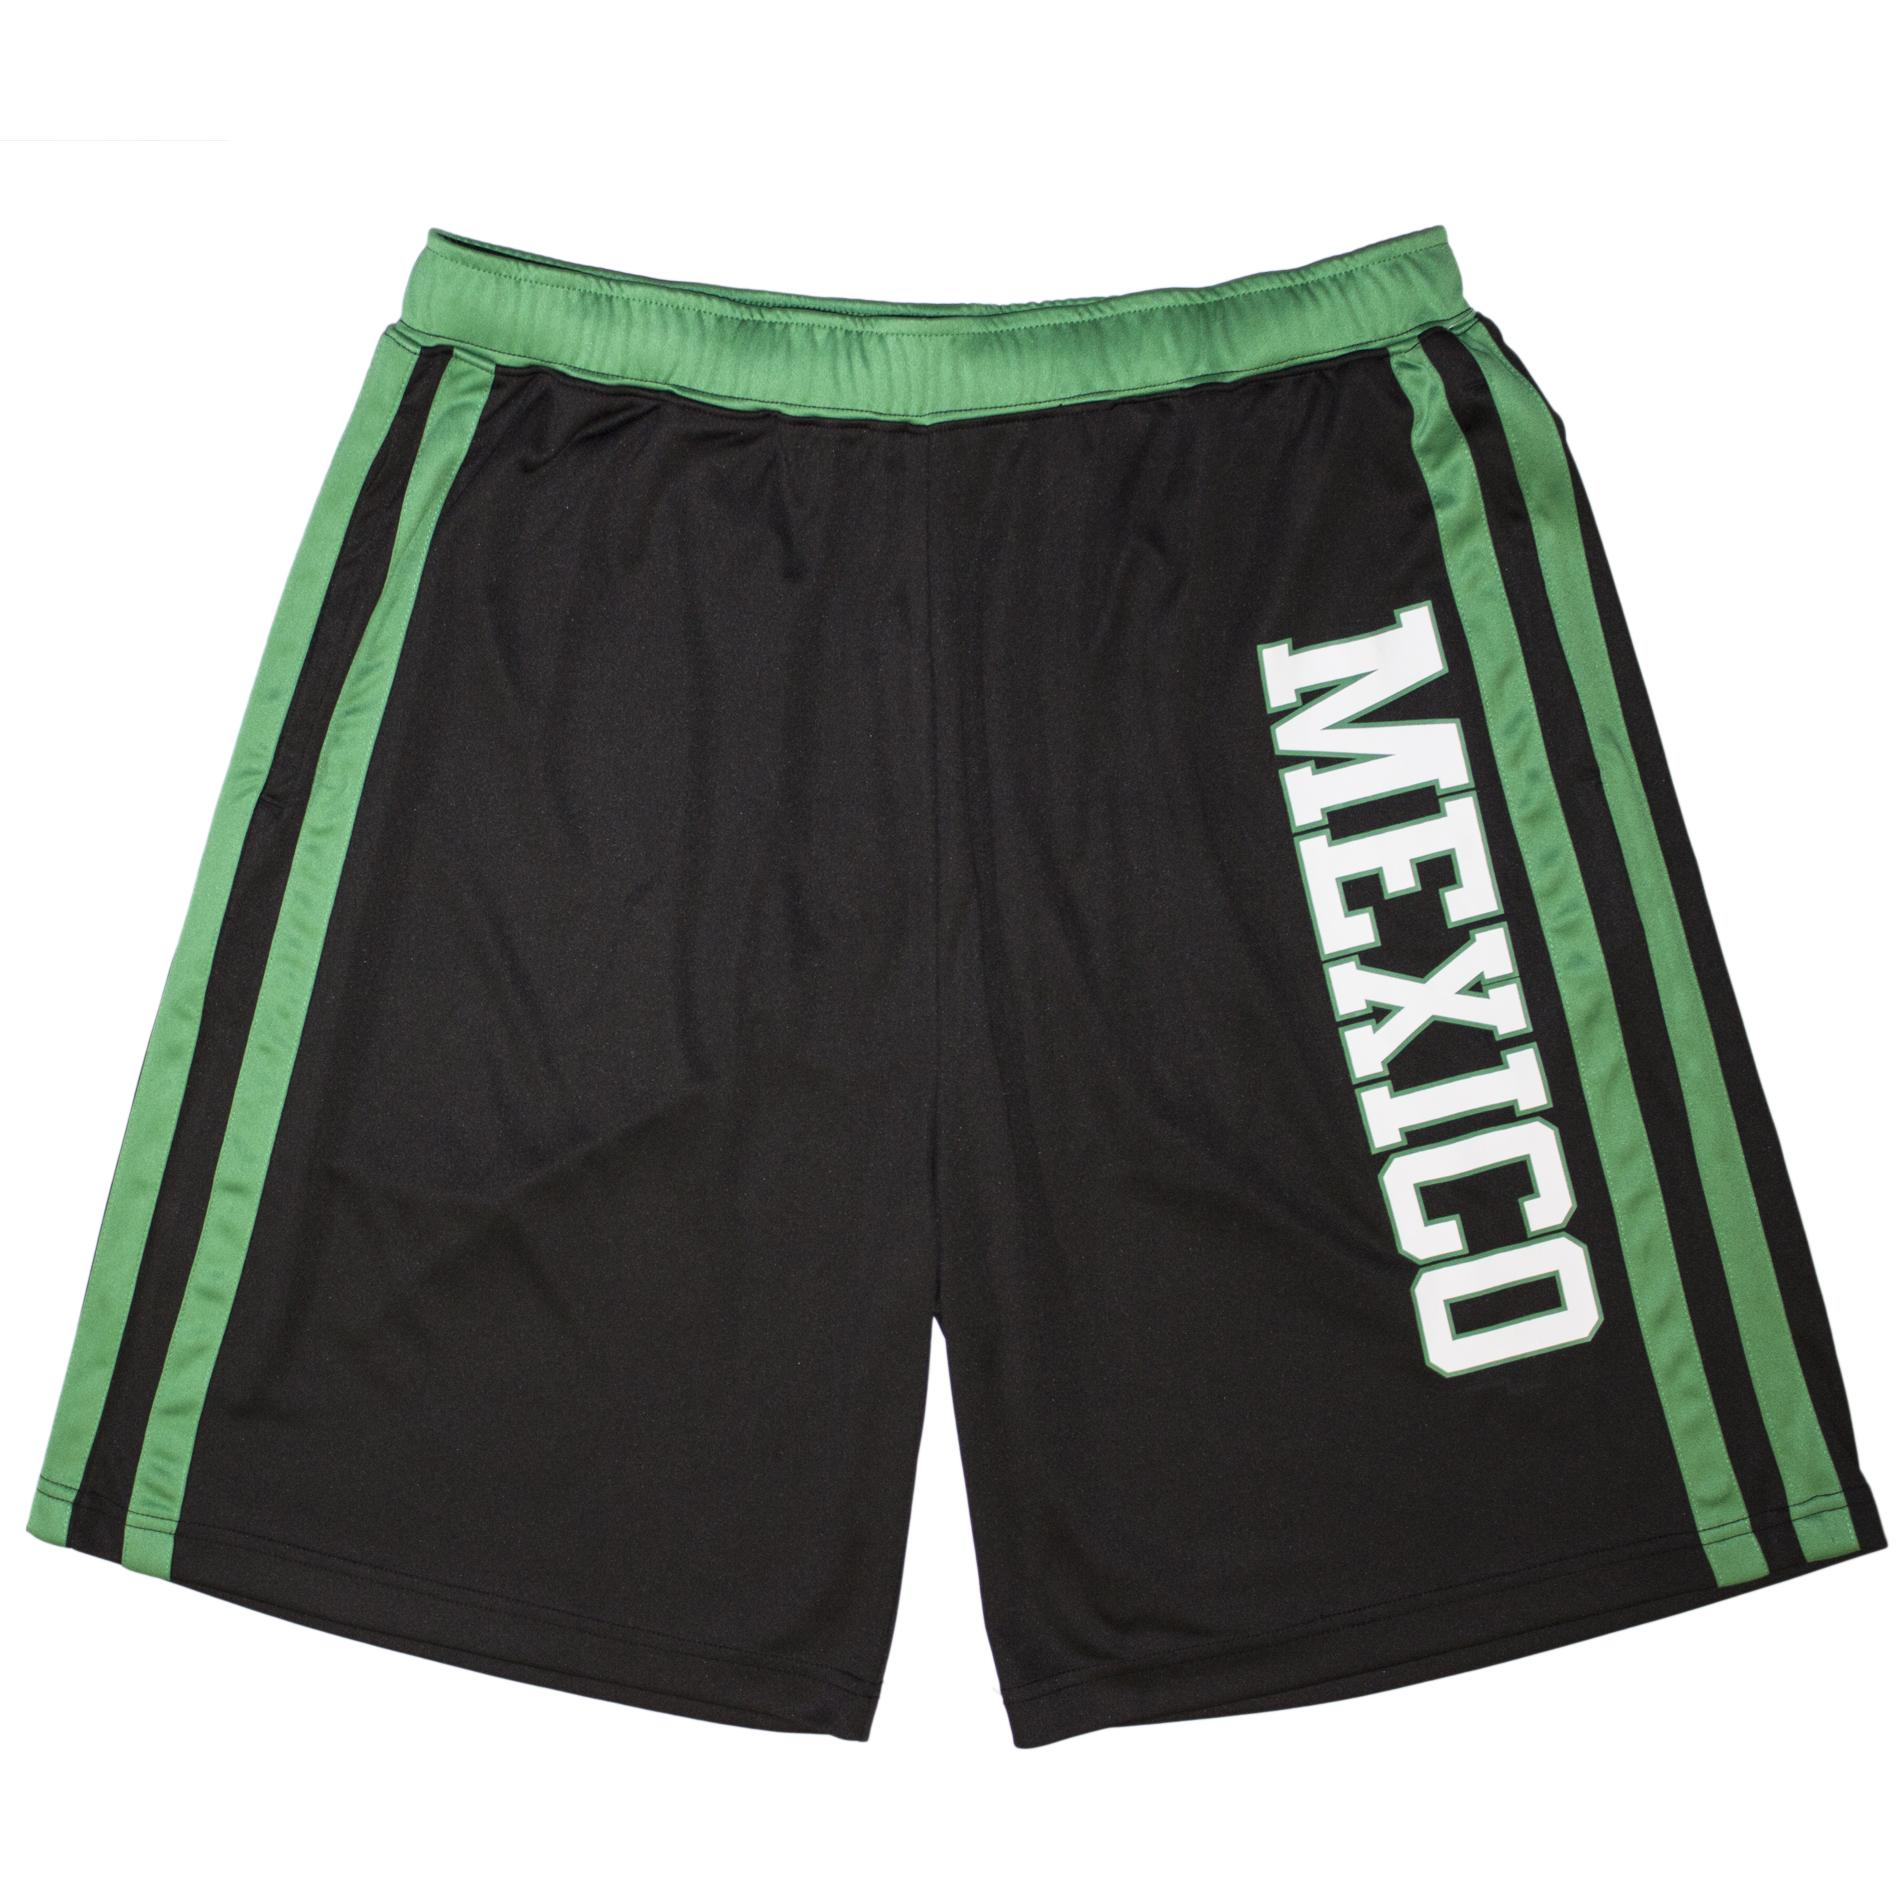 Men's Athletic Shorts - Mexico